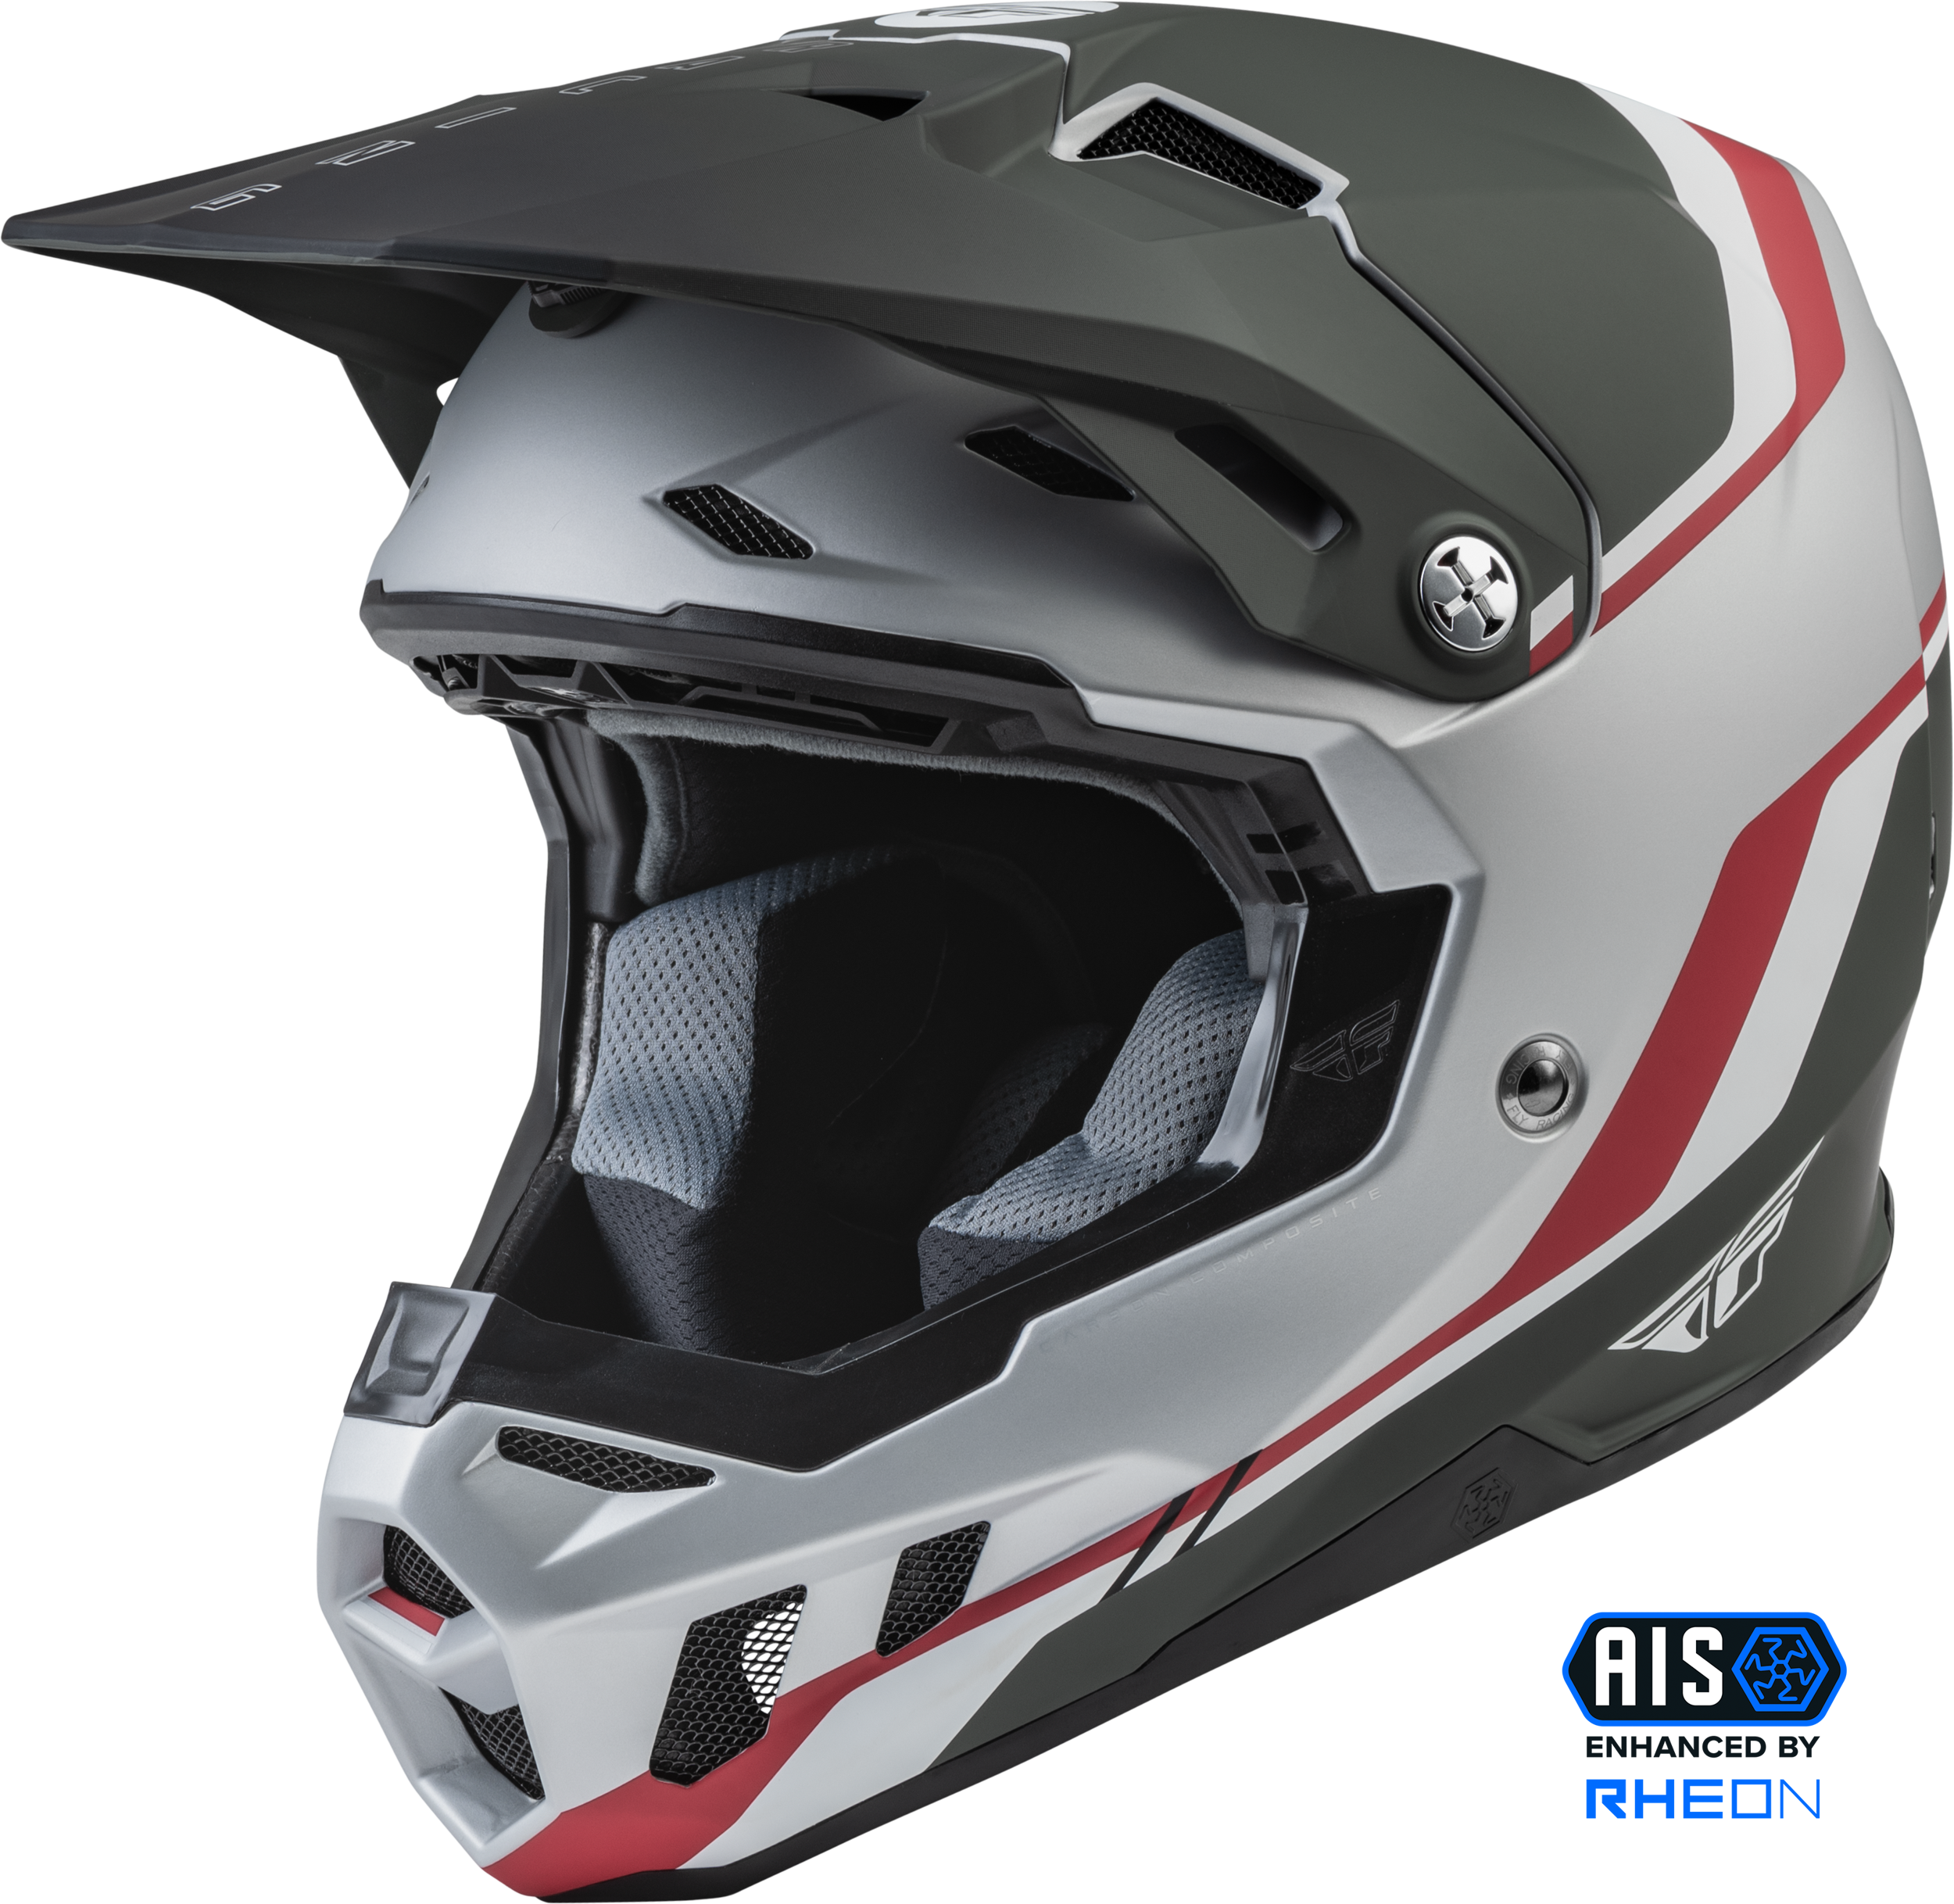 Formula Cc Driver Helmet Matte Silver/Red/White 2x